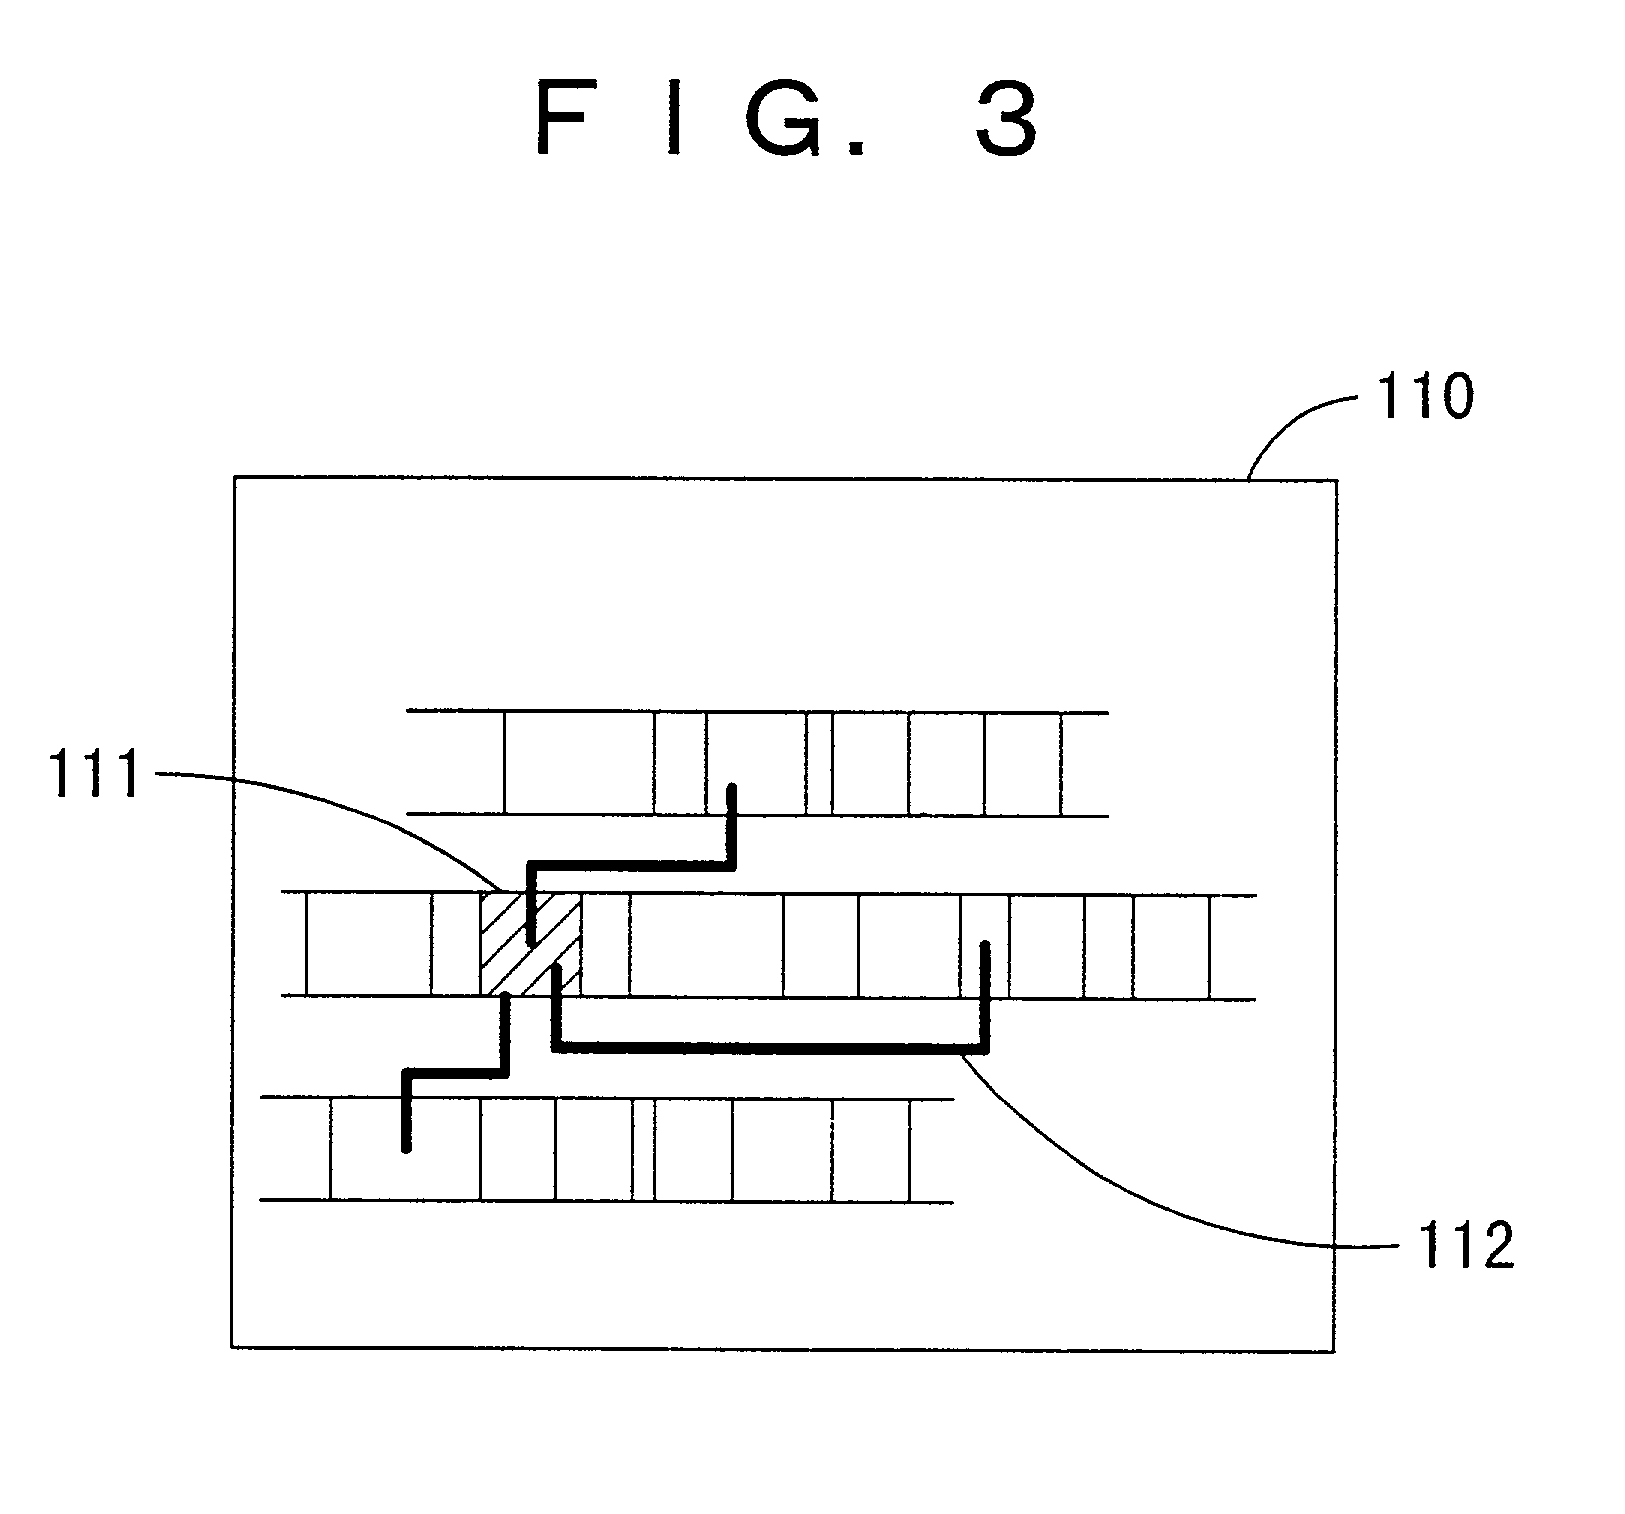 Method for design of partial circuit